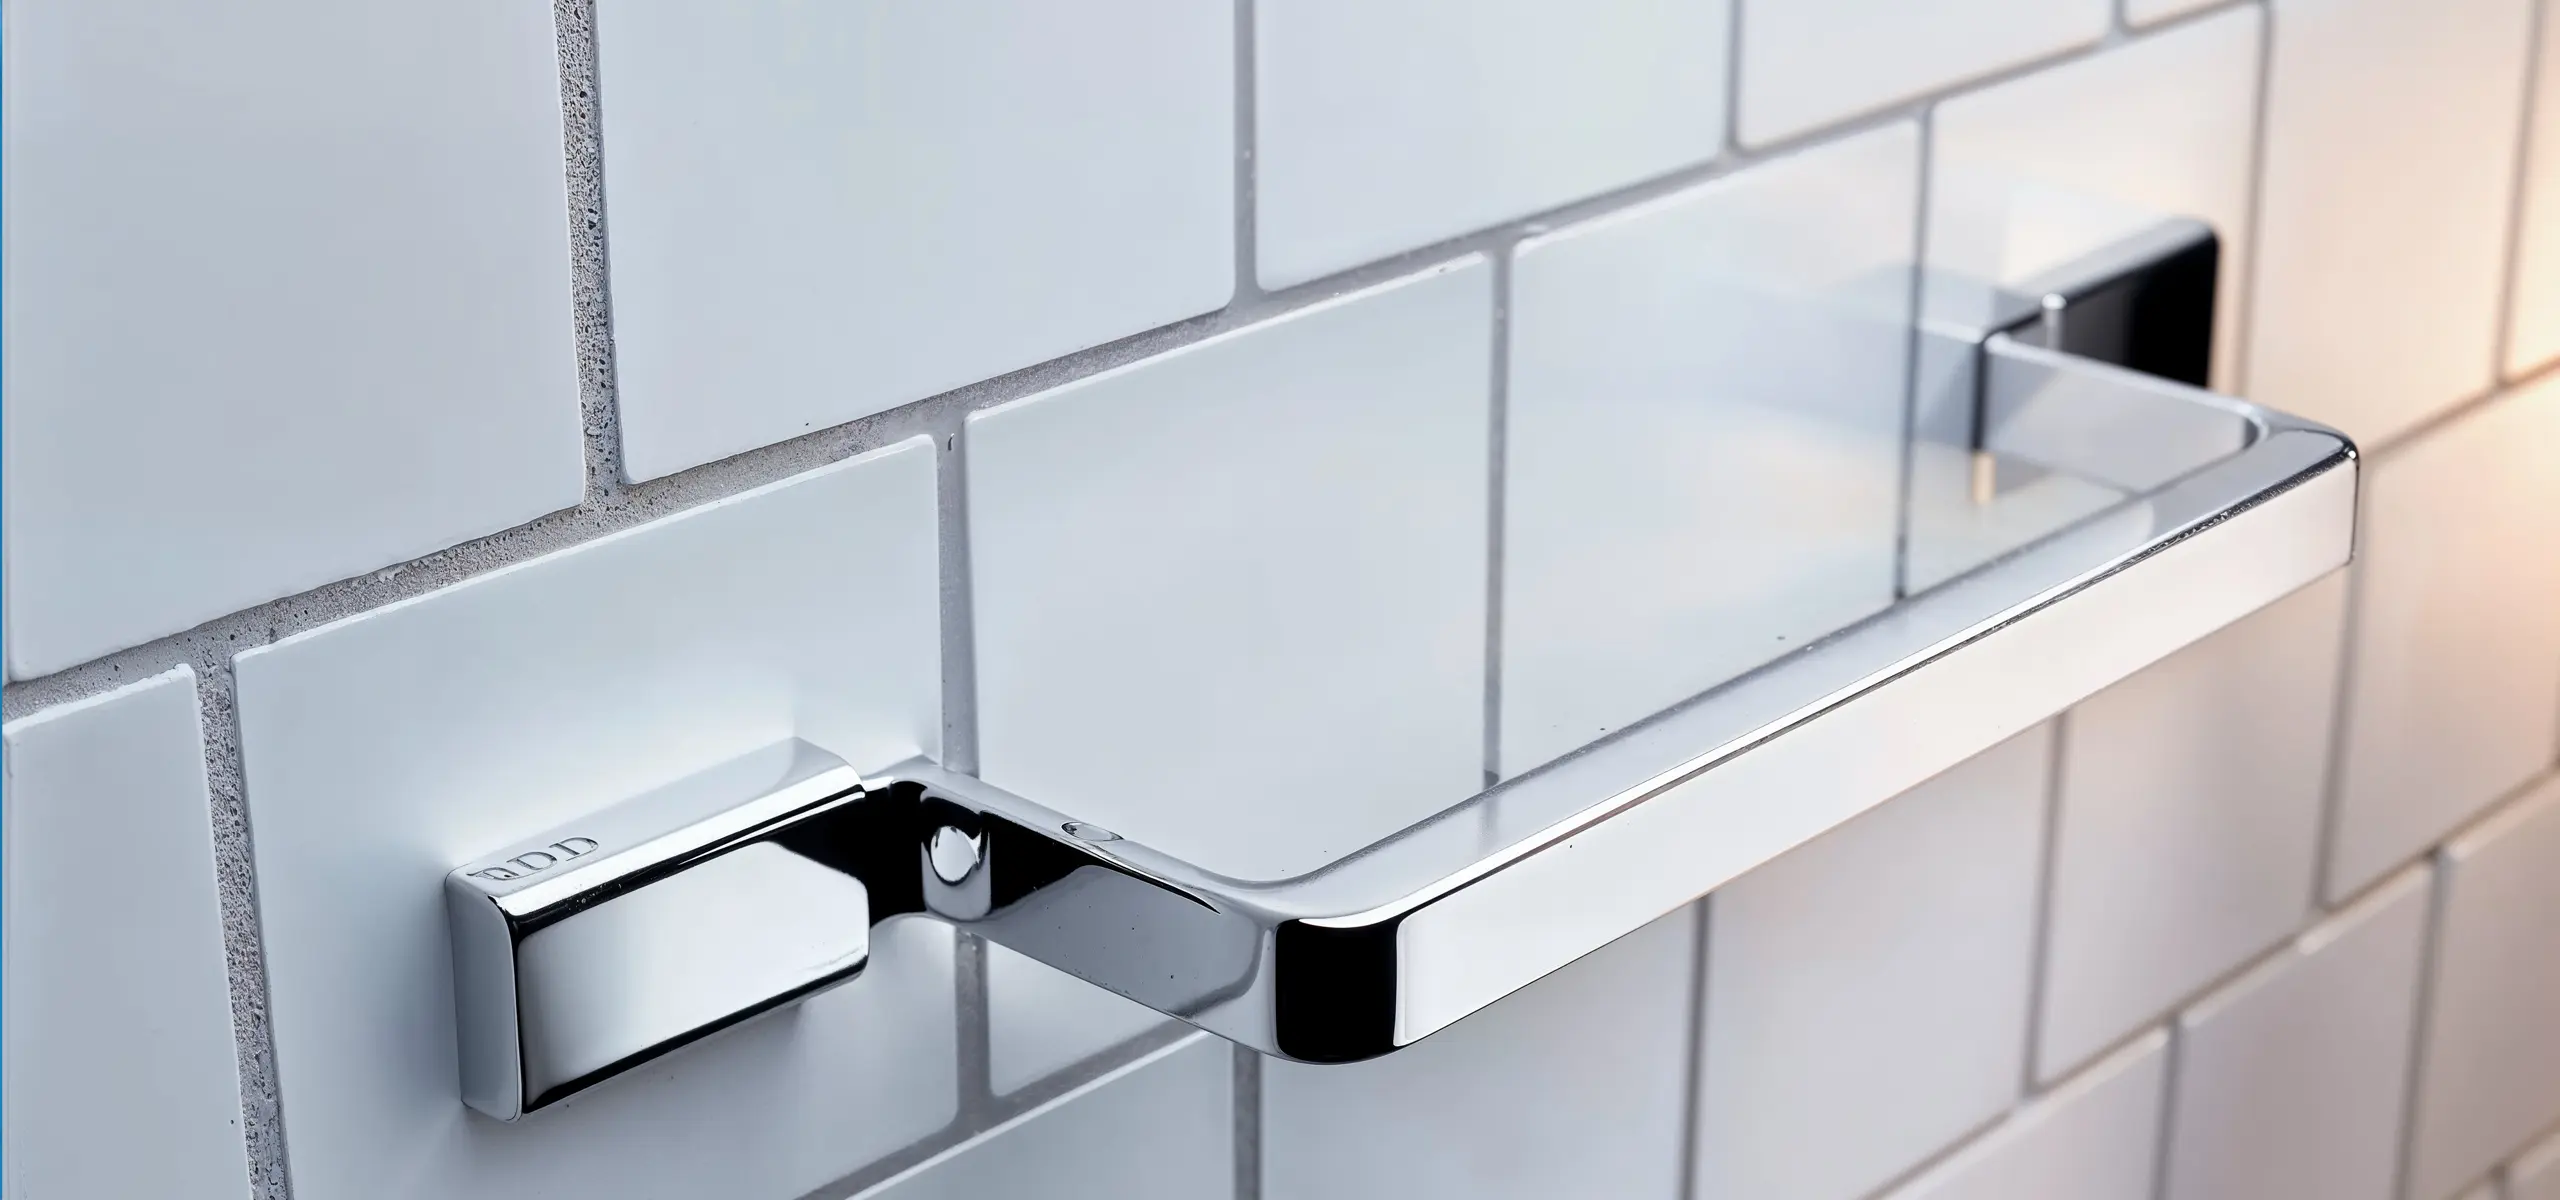 Geesa bathroom wall grip design by Groen & Boothman Amsterdam